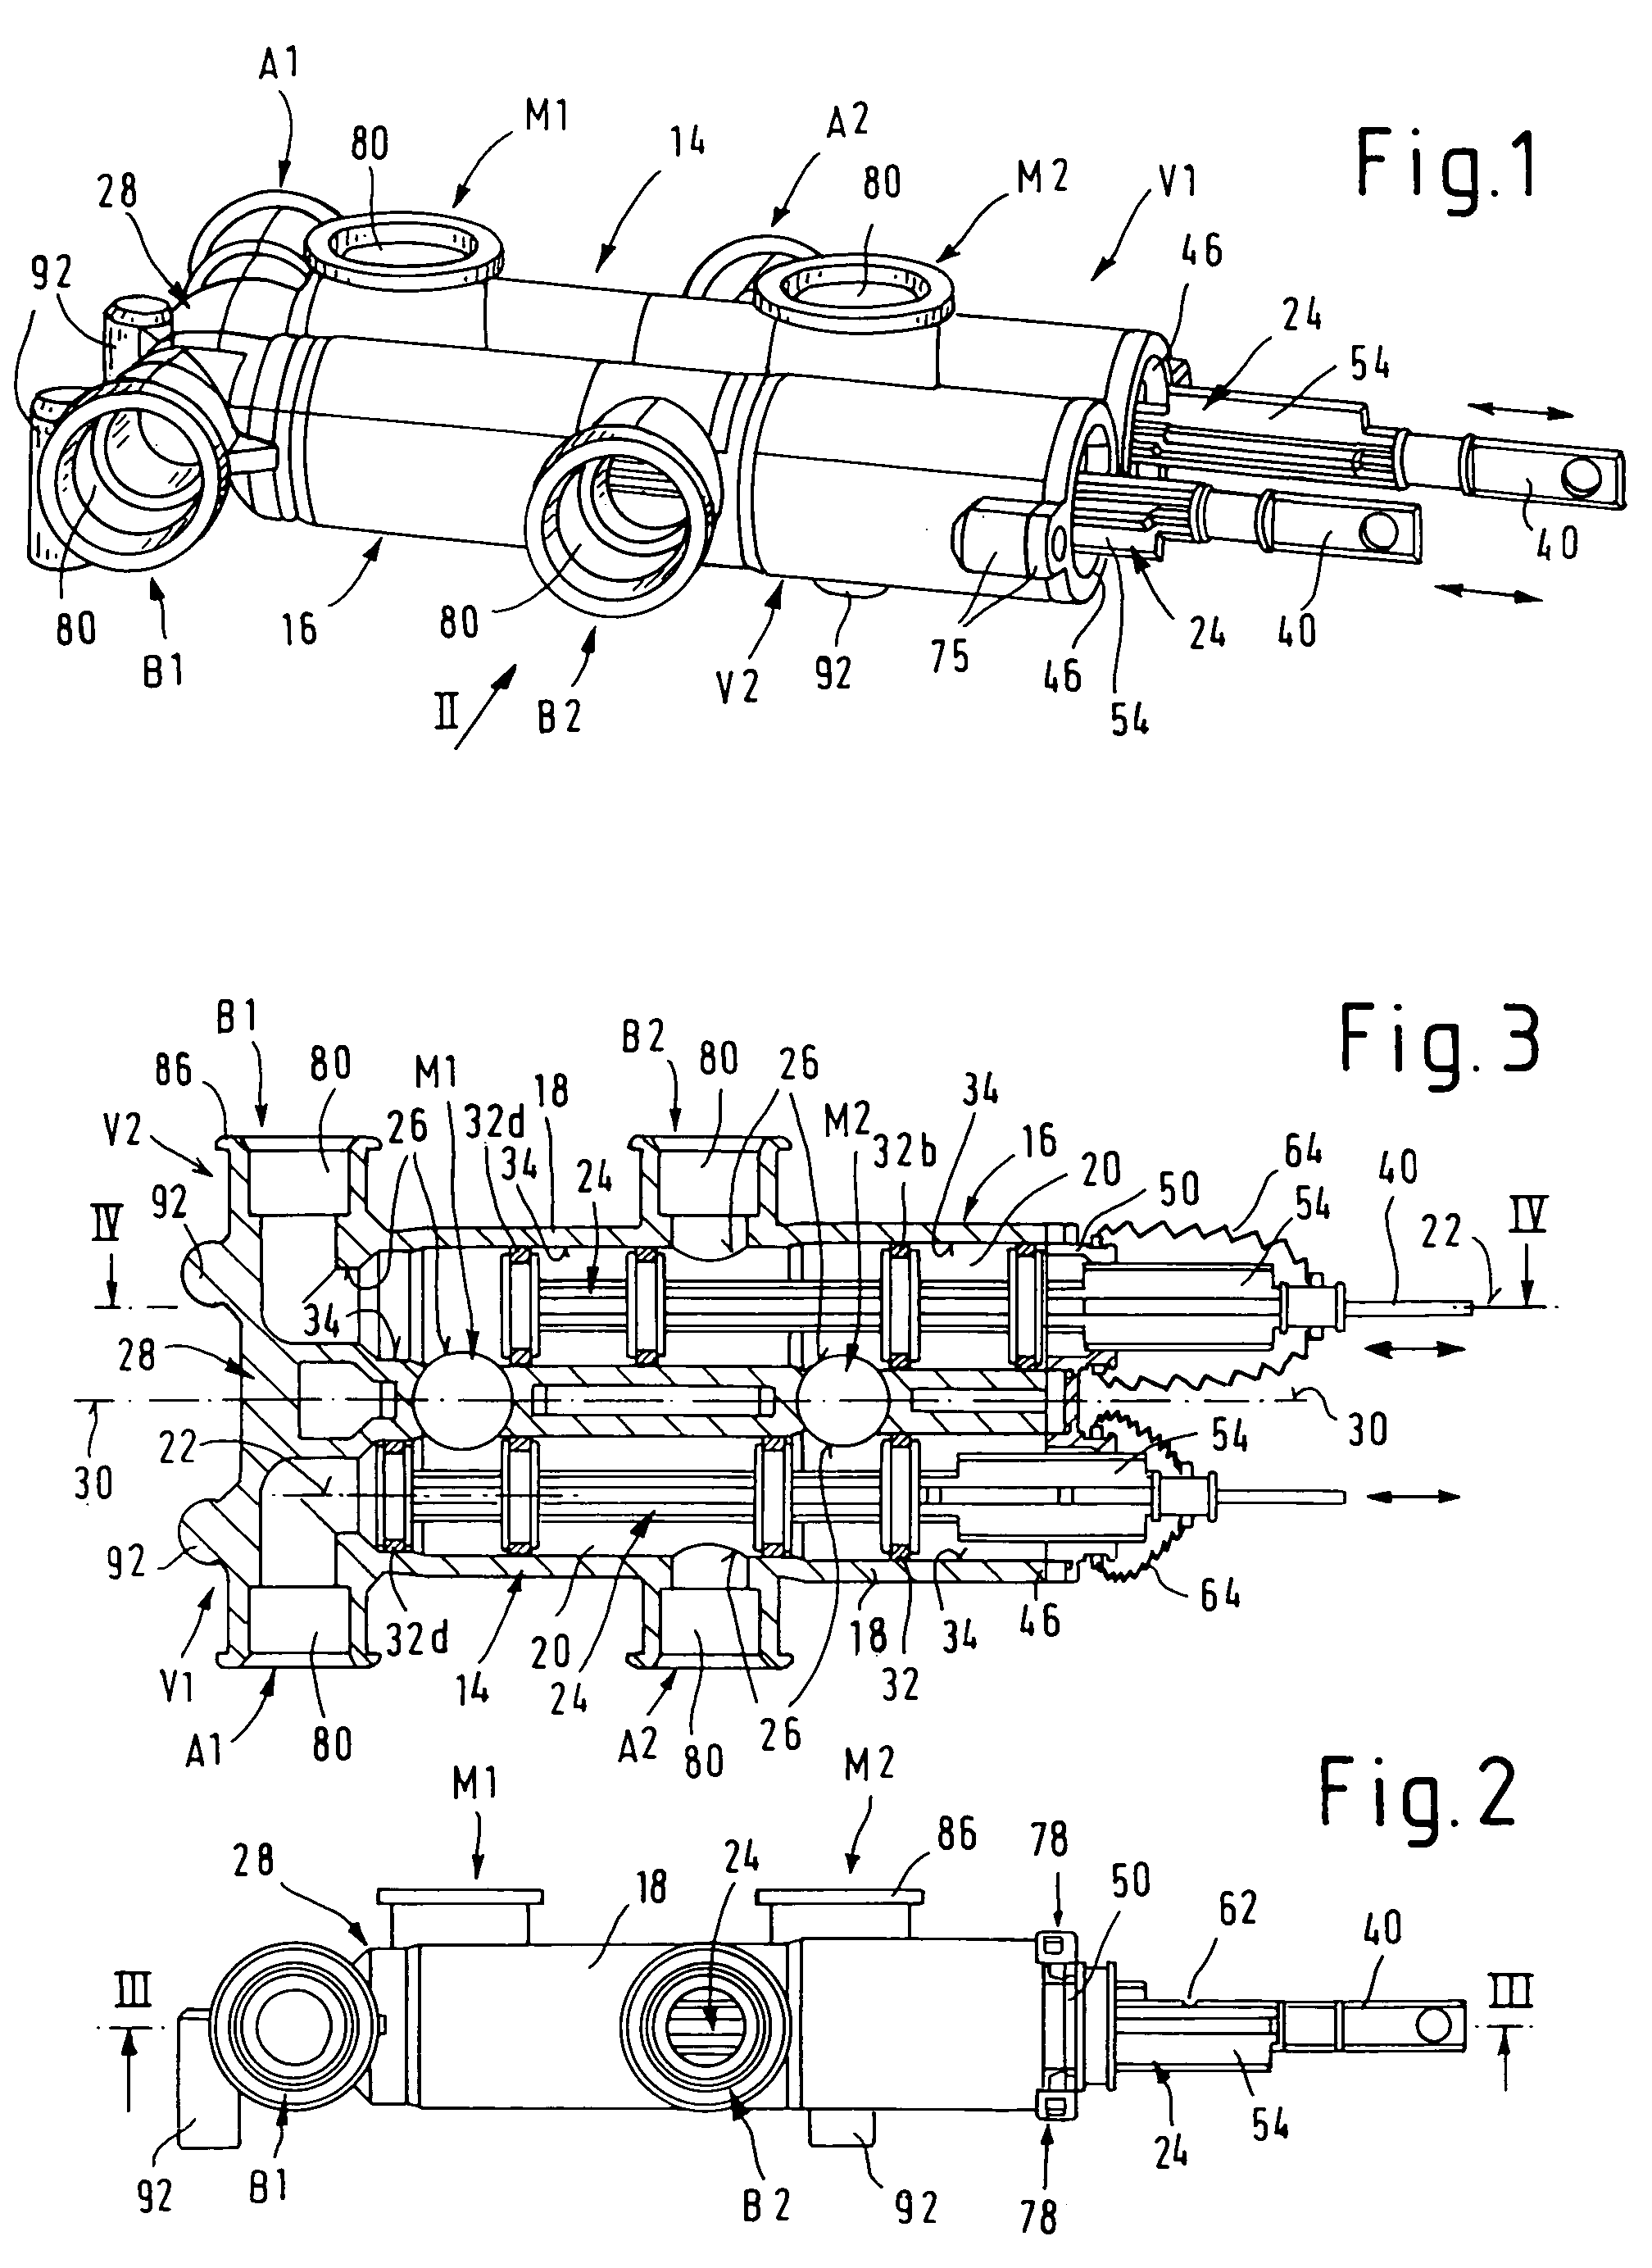 Multiway valve arrangement